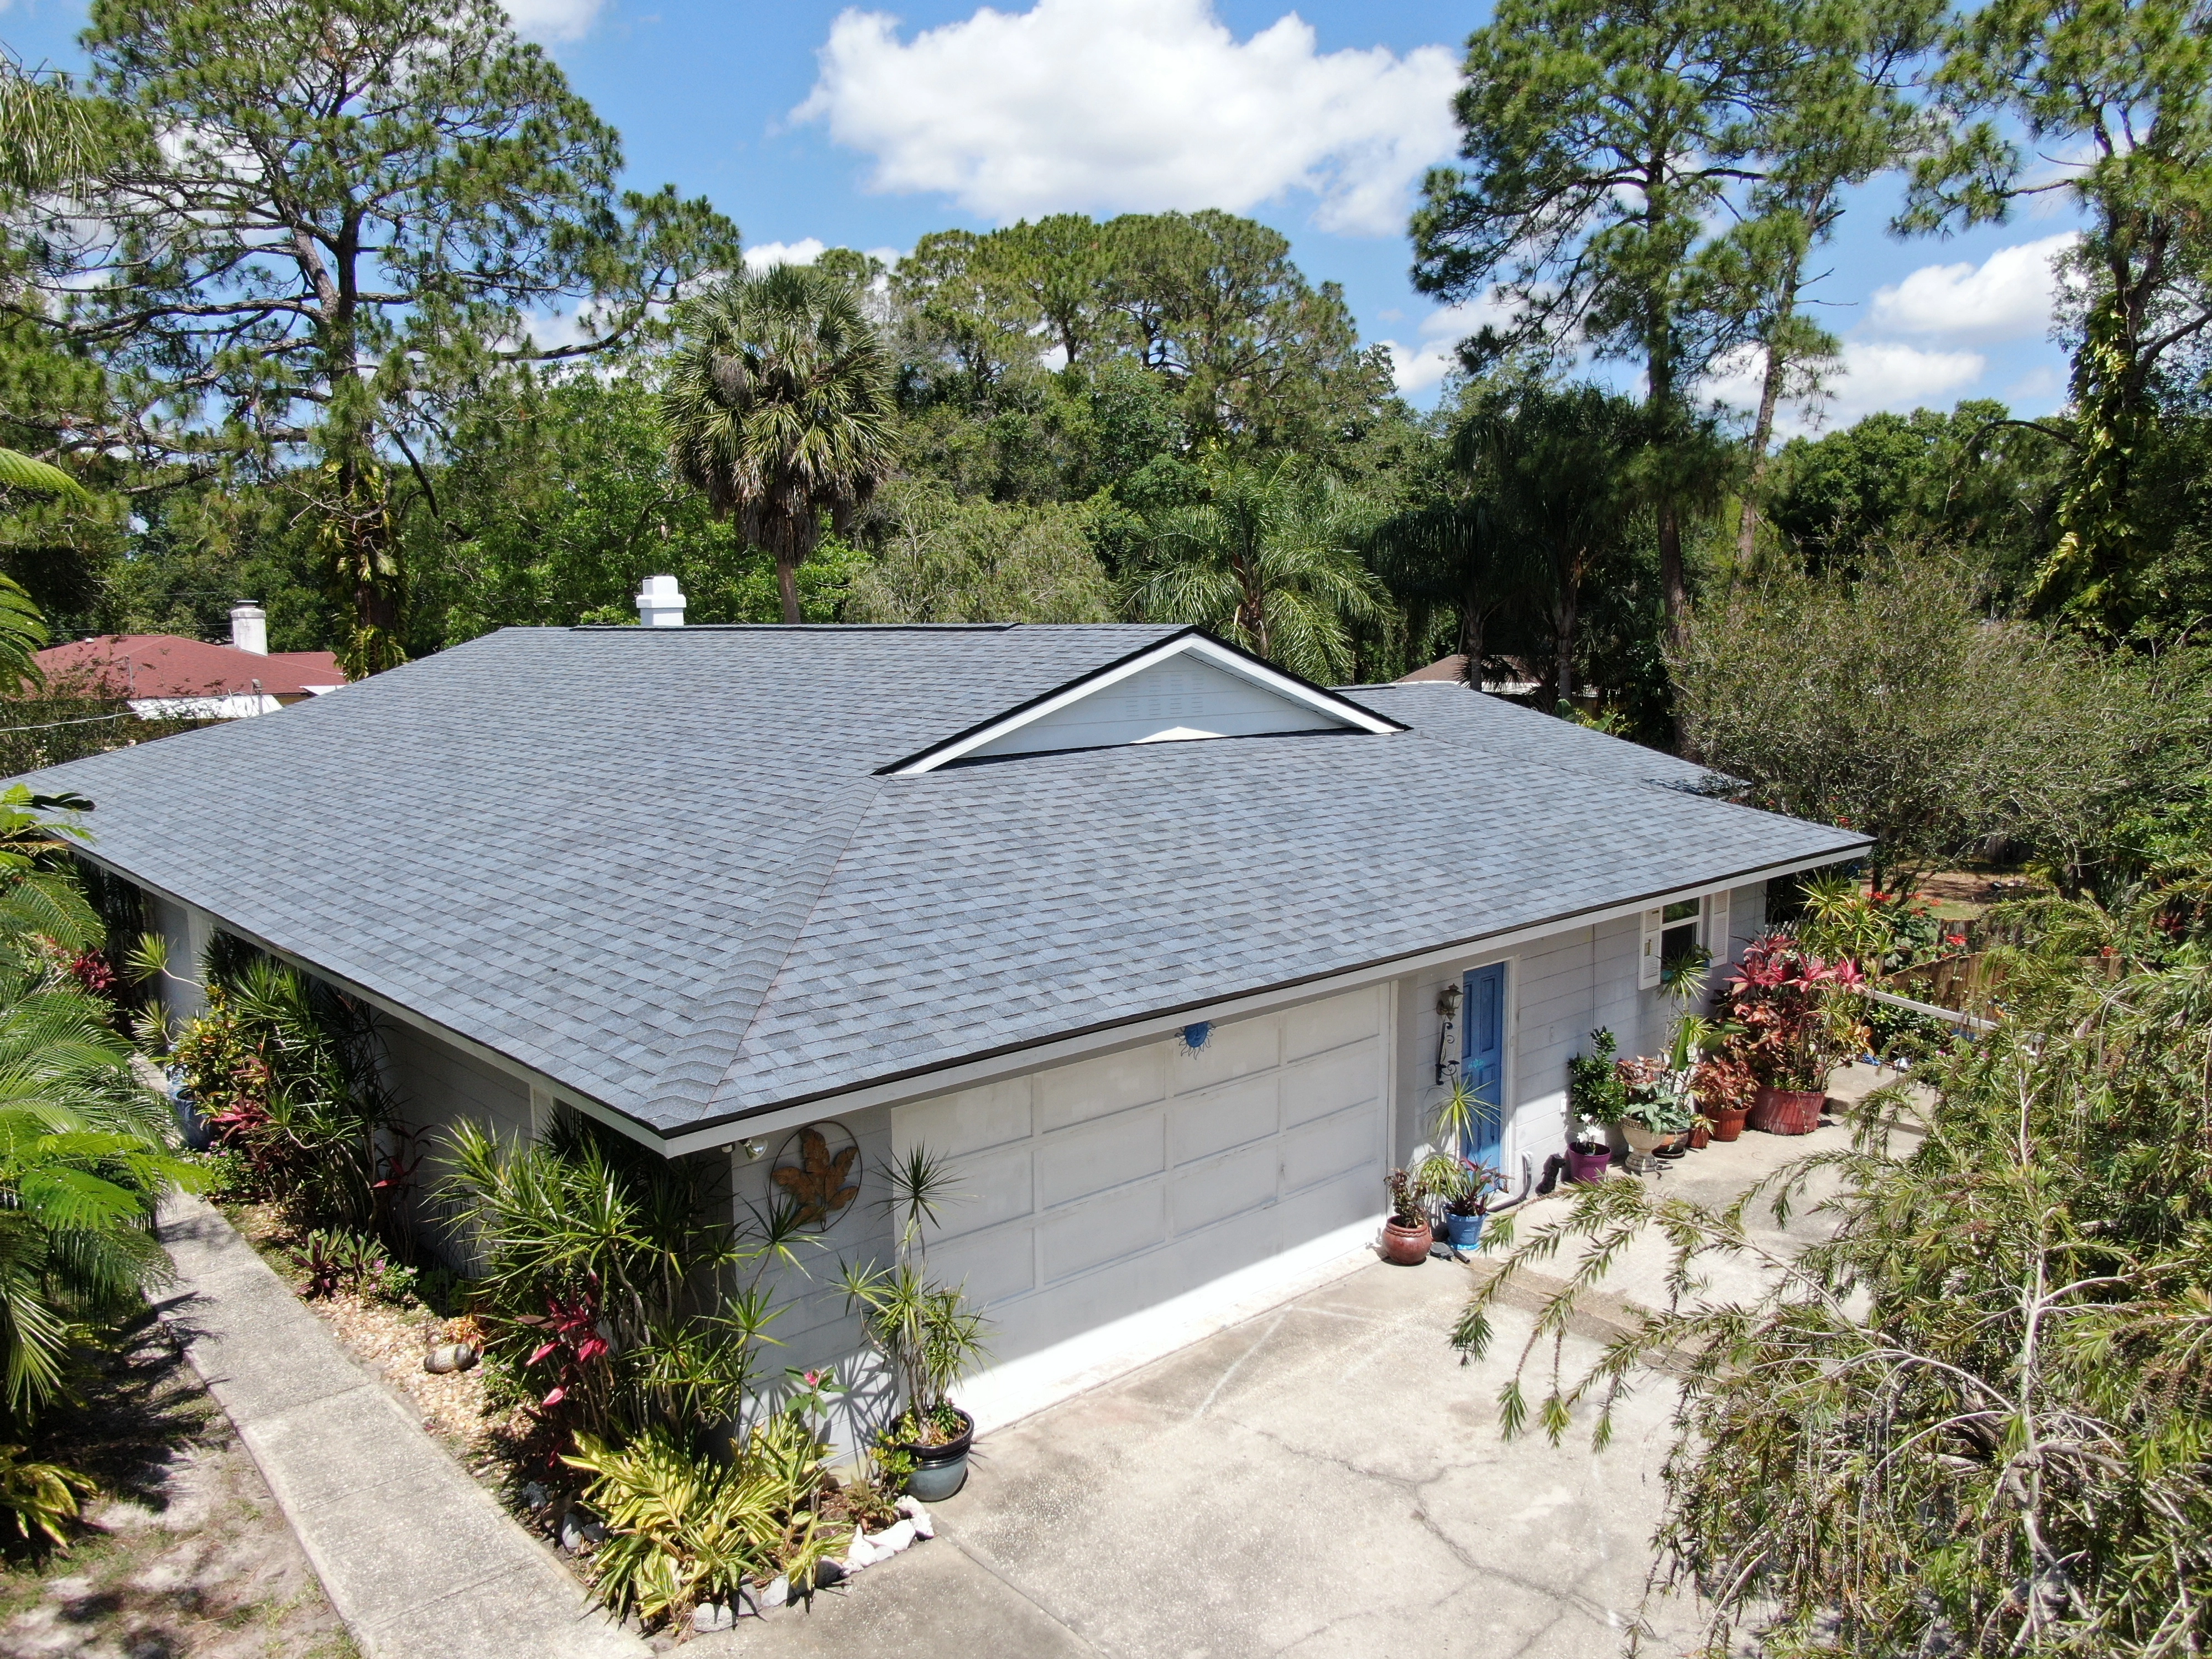 New shingle roof on a Florida home